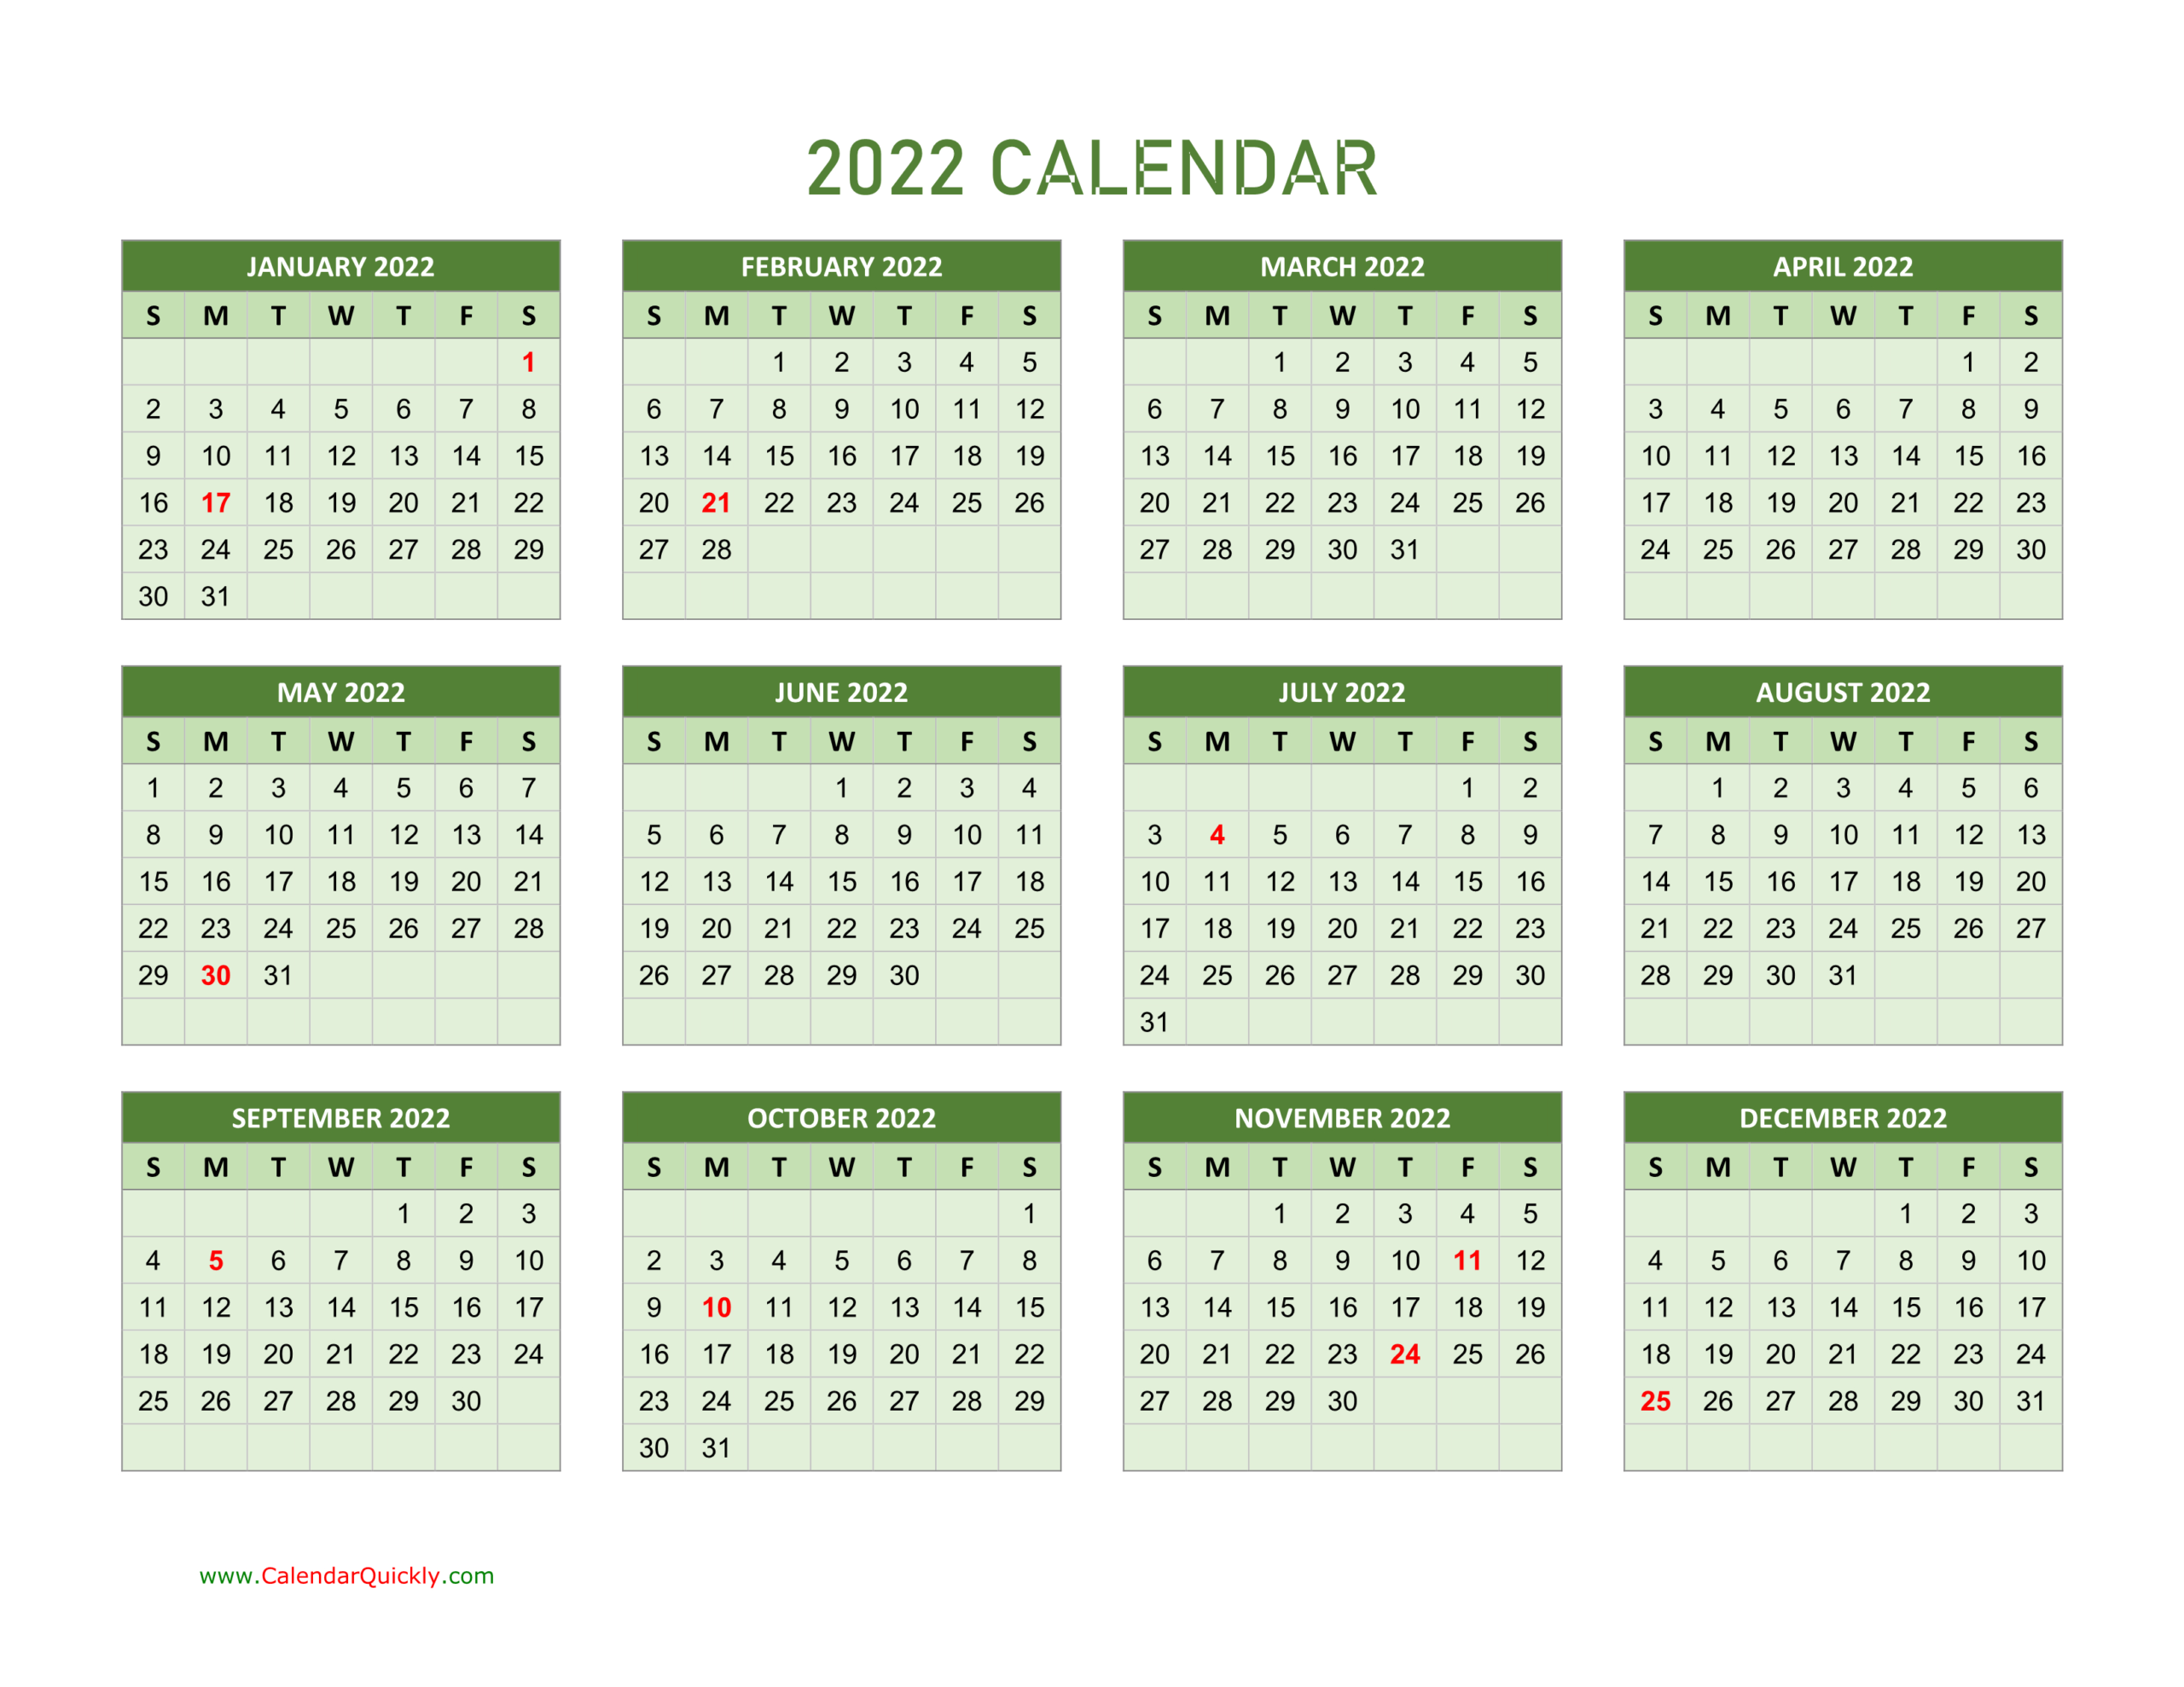 Yearly Calendar 2022 | Calendar Quickly  Free Calendar Template 2022 Large